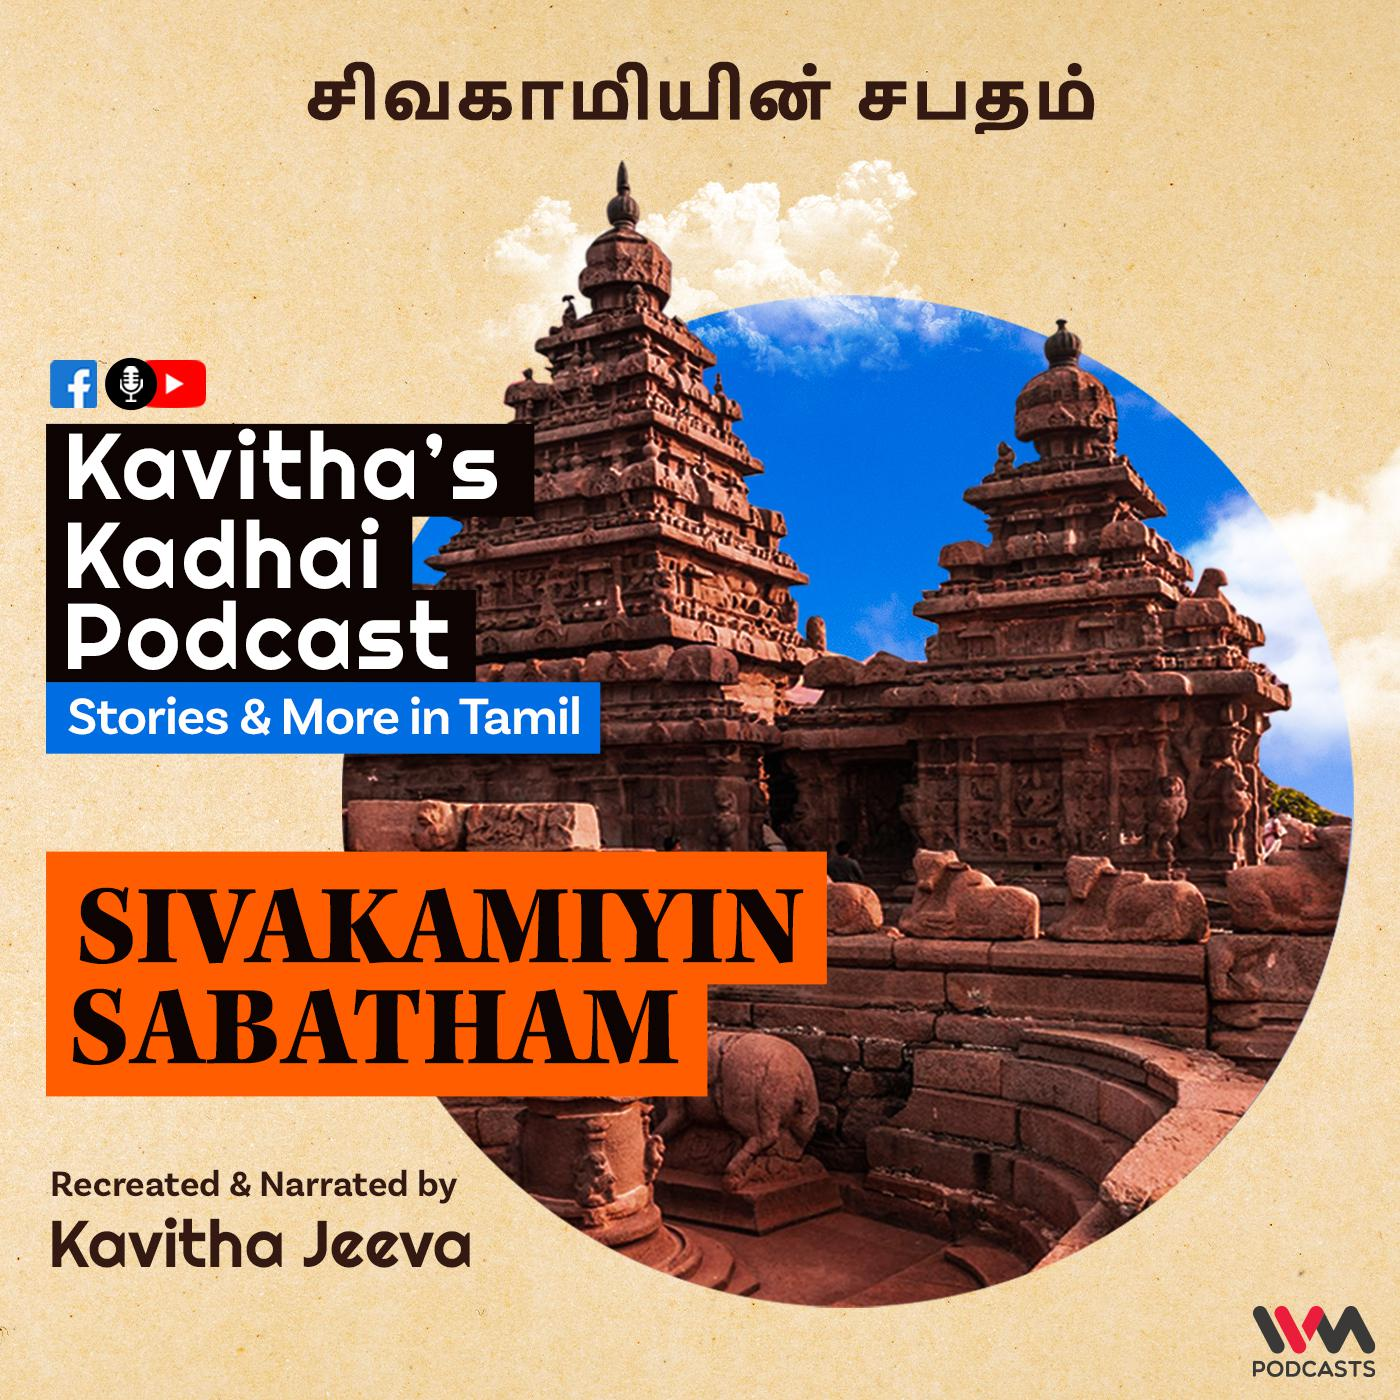 KadhaiPodcast's Sivakamiyin Sabatham with Kavitha Jeeva - Episode #118